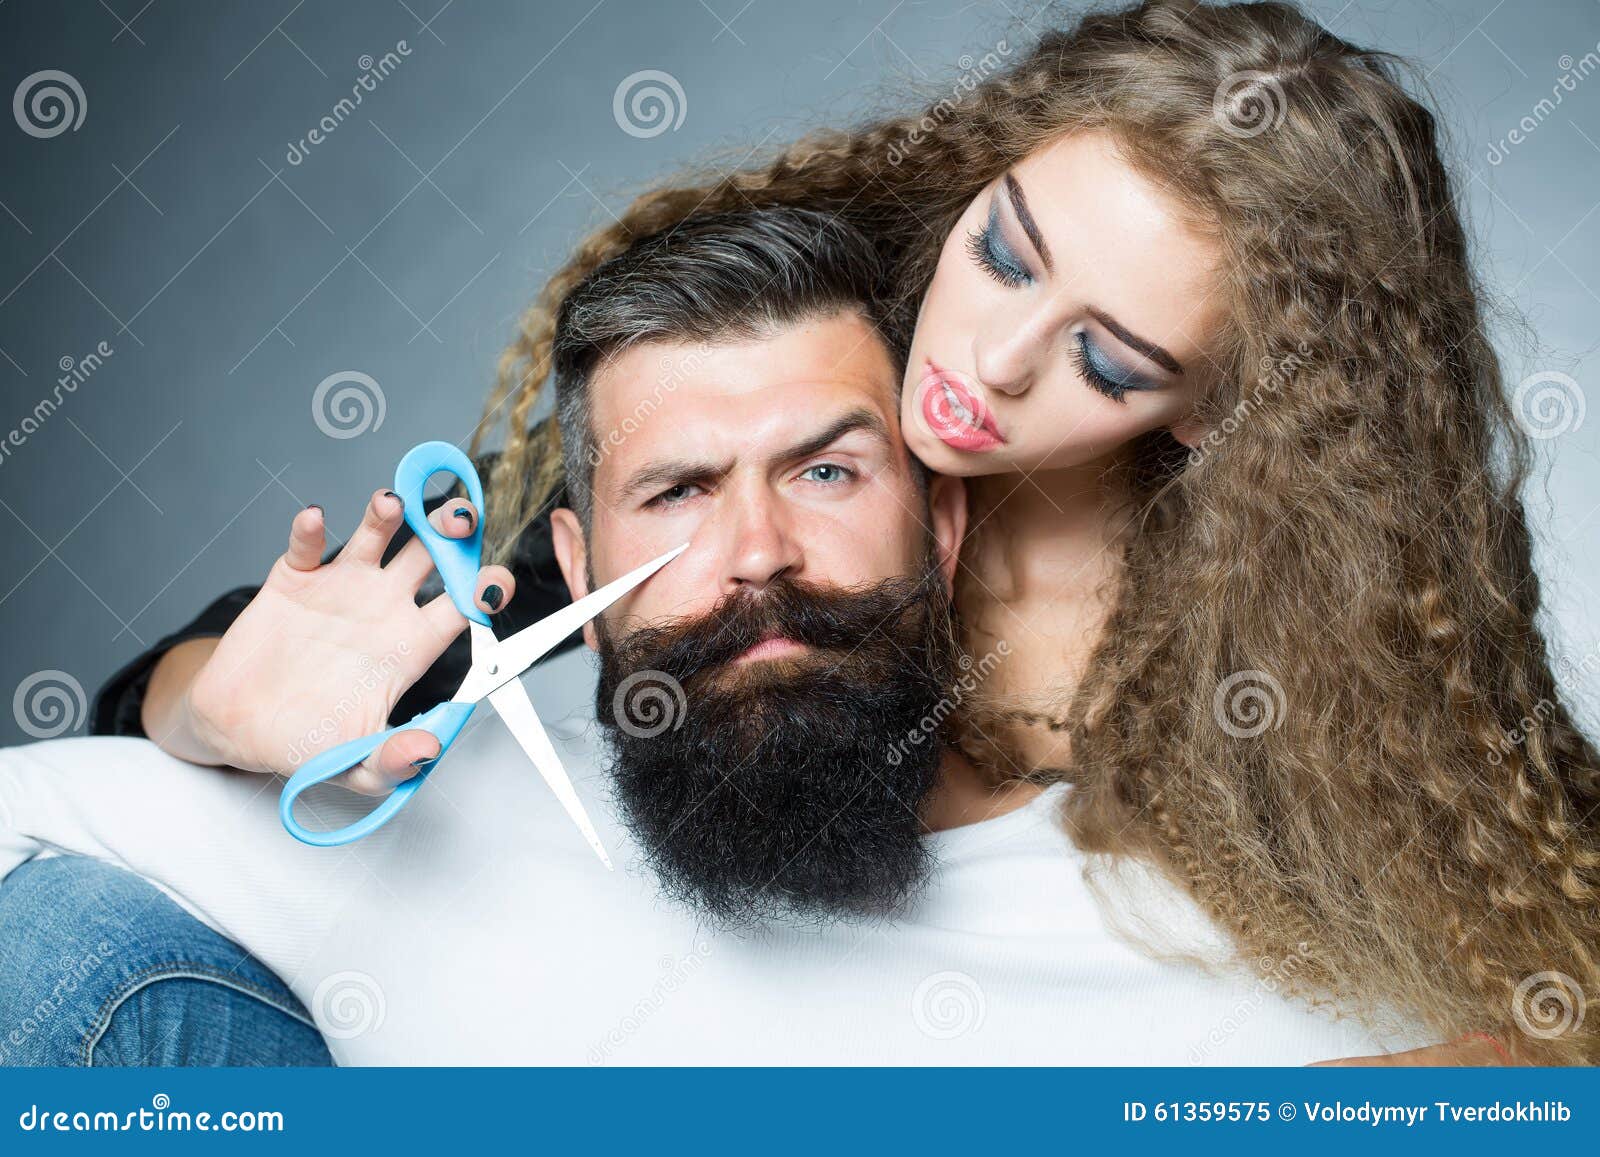 Woman Cutting Man's Beard Stock Photo - Image: 61359575